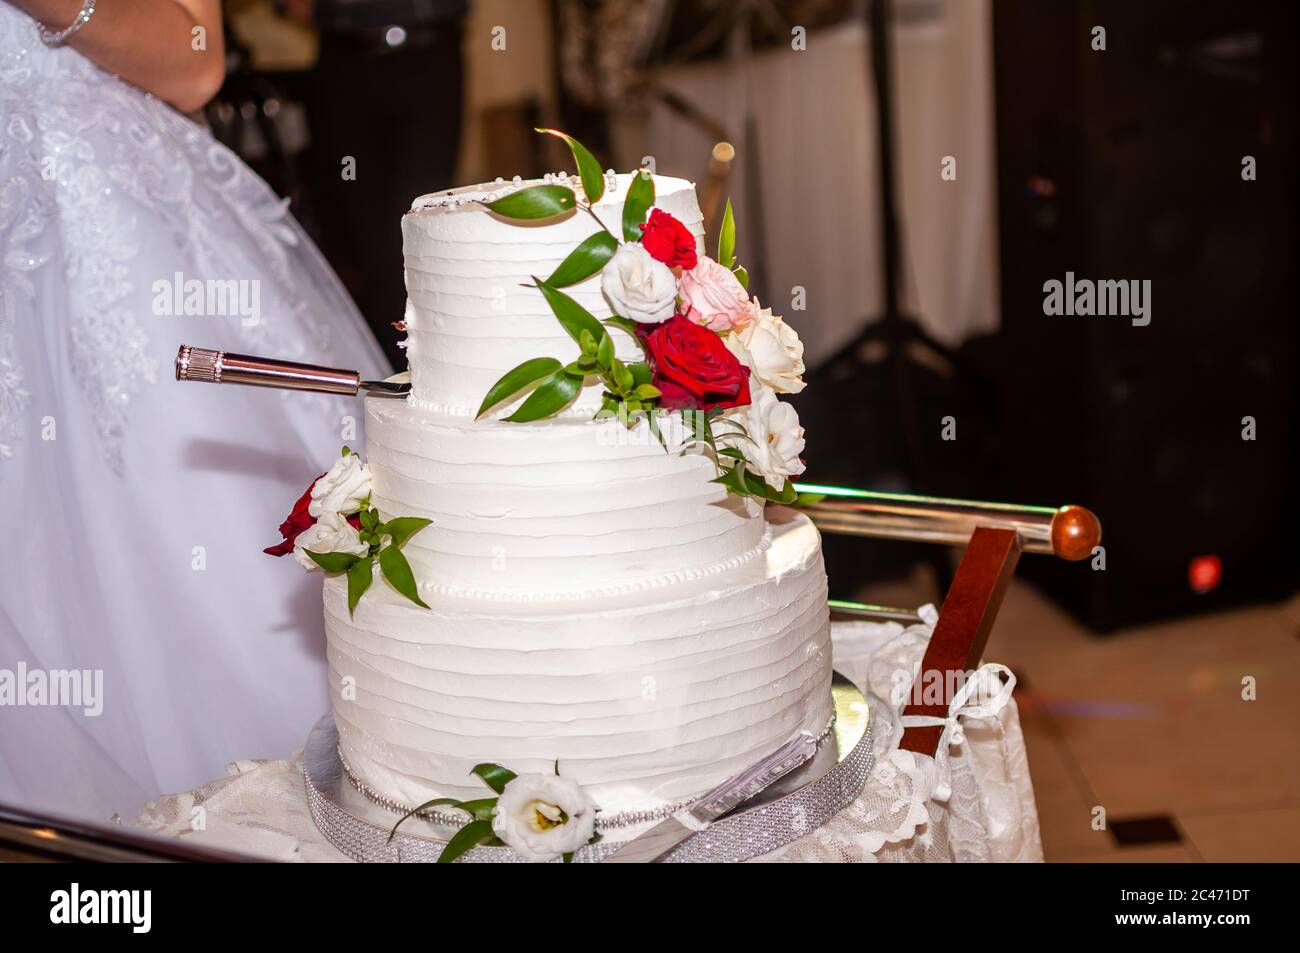 Bride and groom cuting white wedding cake Stock Photo